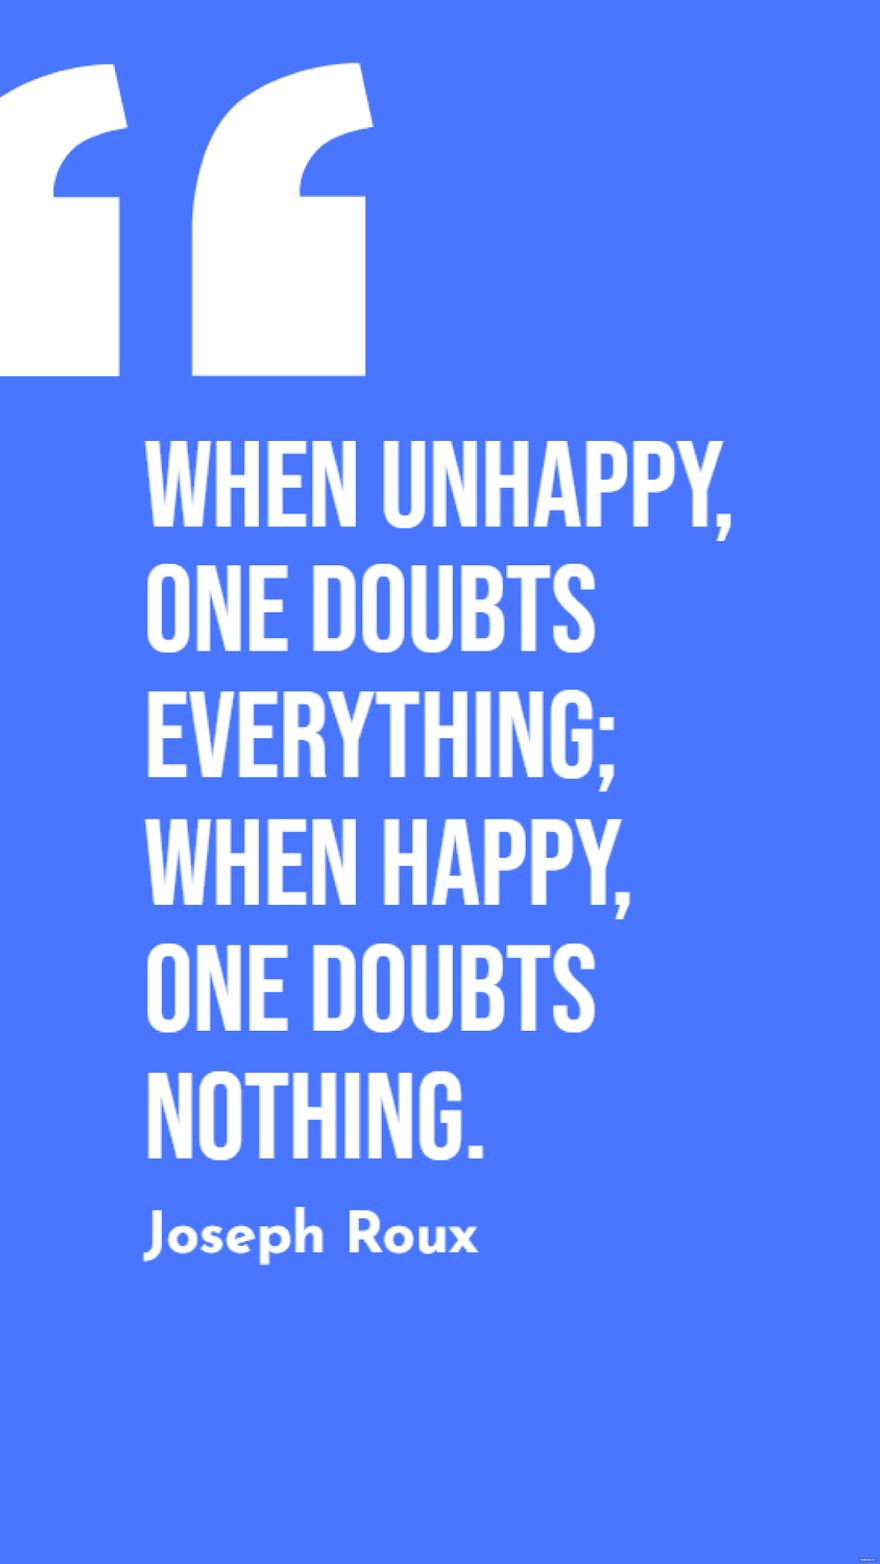 Free Joseph Roux - When unhappy, one doubts everything; when happy, one doubts nothing. in JPG